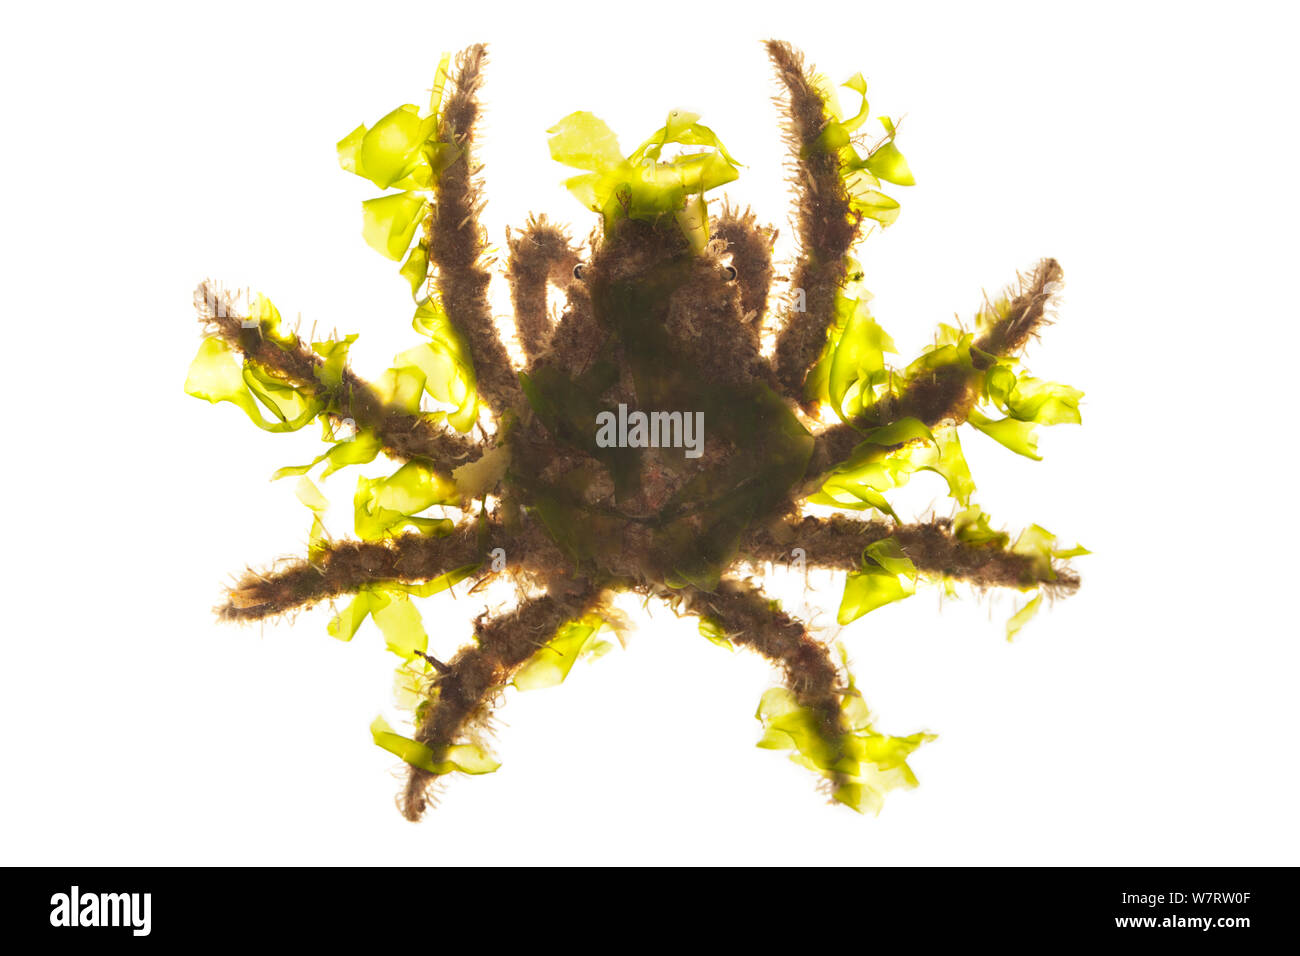 Decorator crab (Loxorhynchus crispatus) using seaweed as camouflage, Malibu, California, USA, May, meetyourneighbours.net project Stock Photo